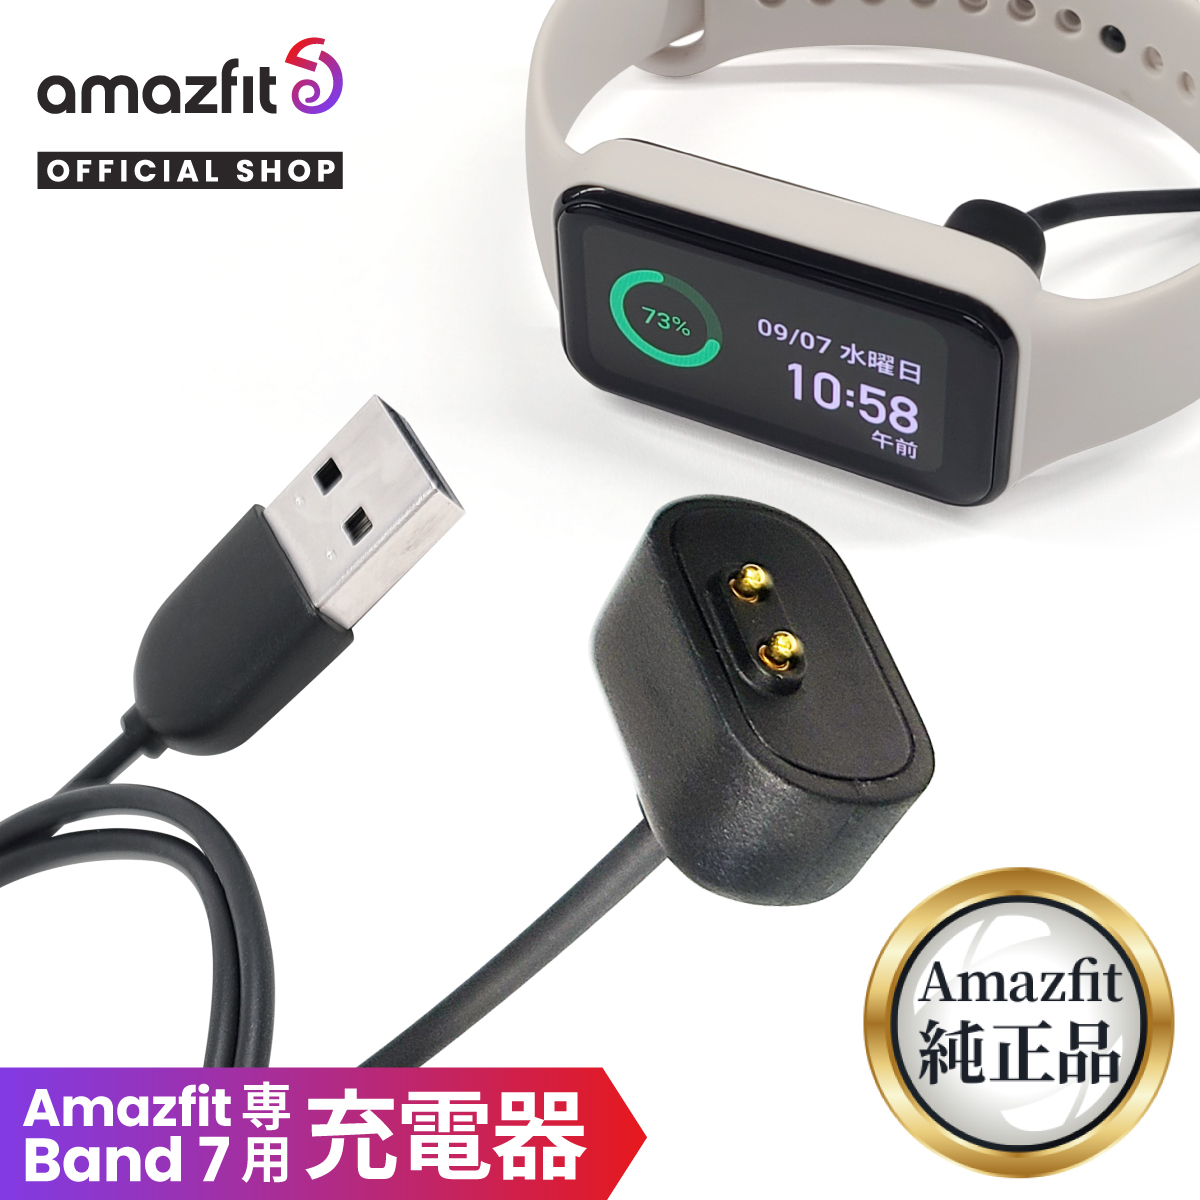 Amazfit Band 7 スマートウォッチ充電器 アマズフィット 純正 USB充電 マグネット式 磁気脱着 予備 バンド7 スマートバンド